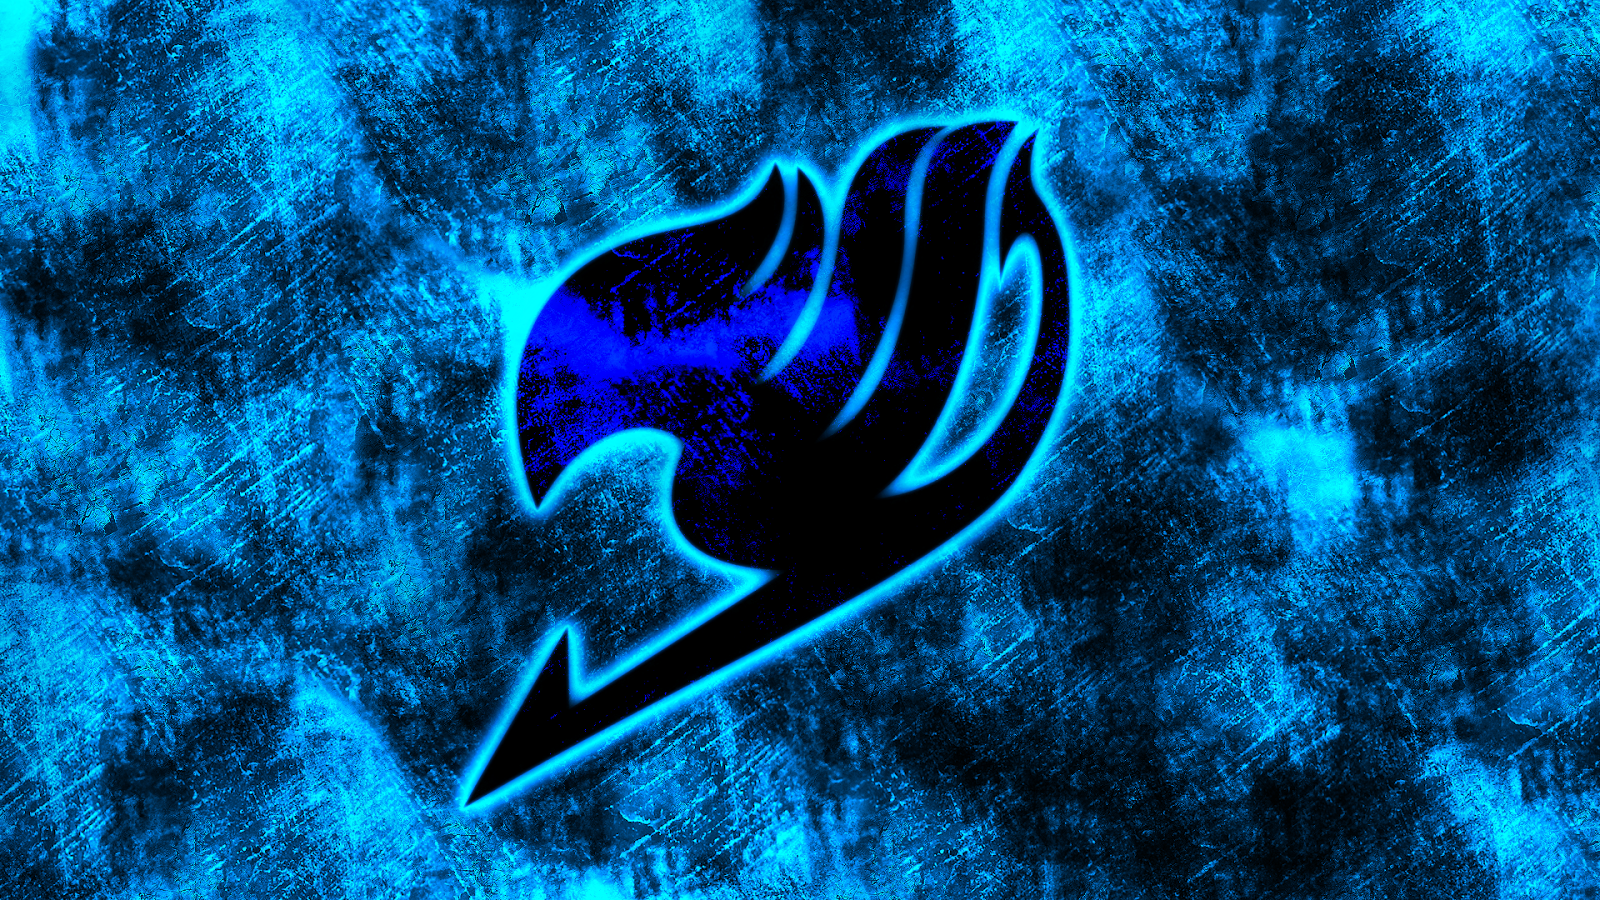 fairy tail logo wallpaper,blue,electric blue,font,logo,graphic design